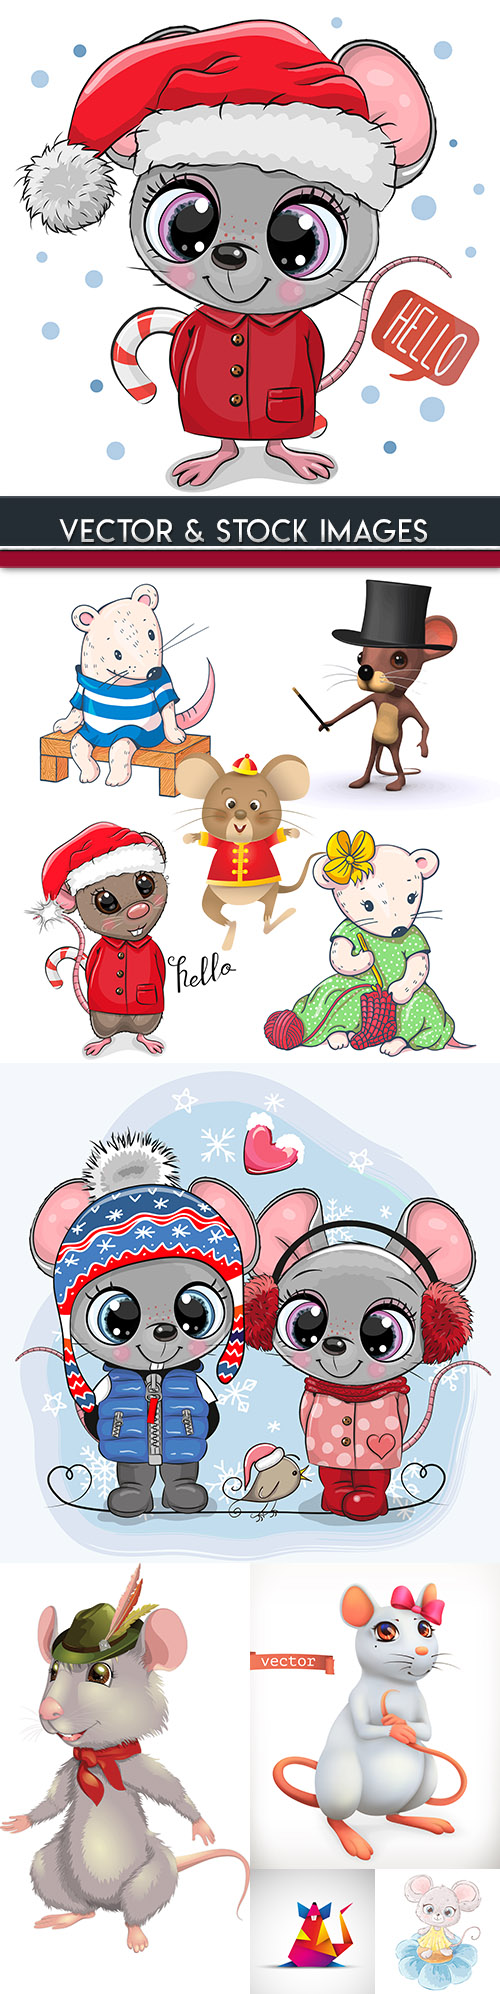 Rat cartoon symbol of New Year 2020 illustration 2